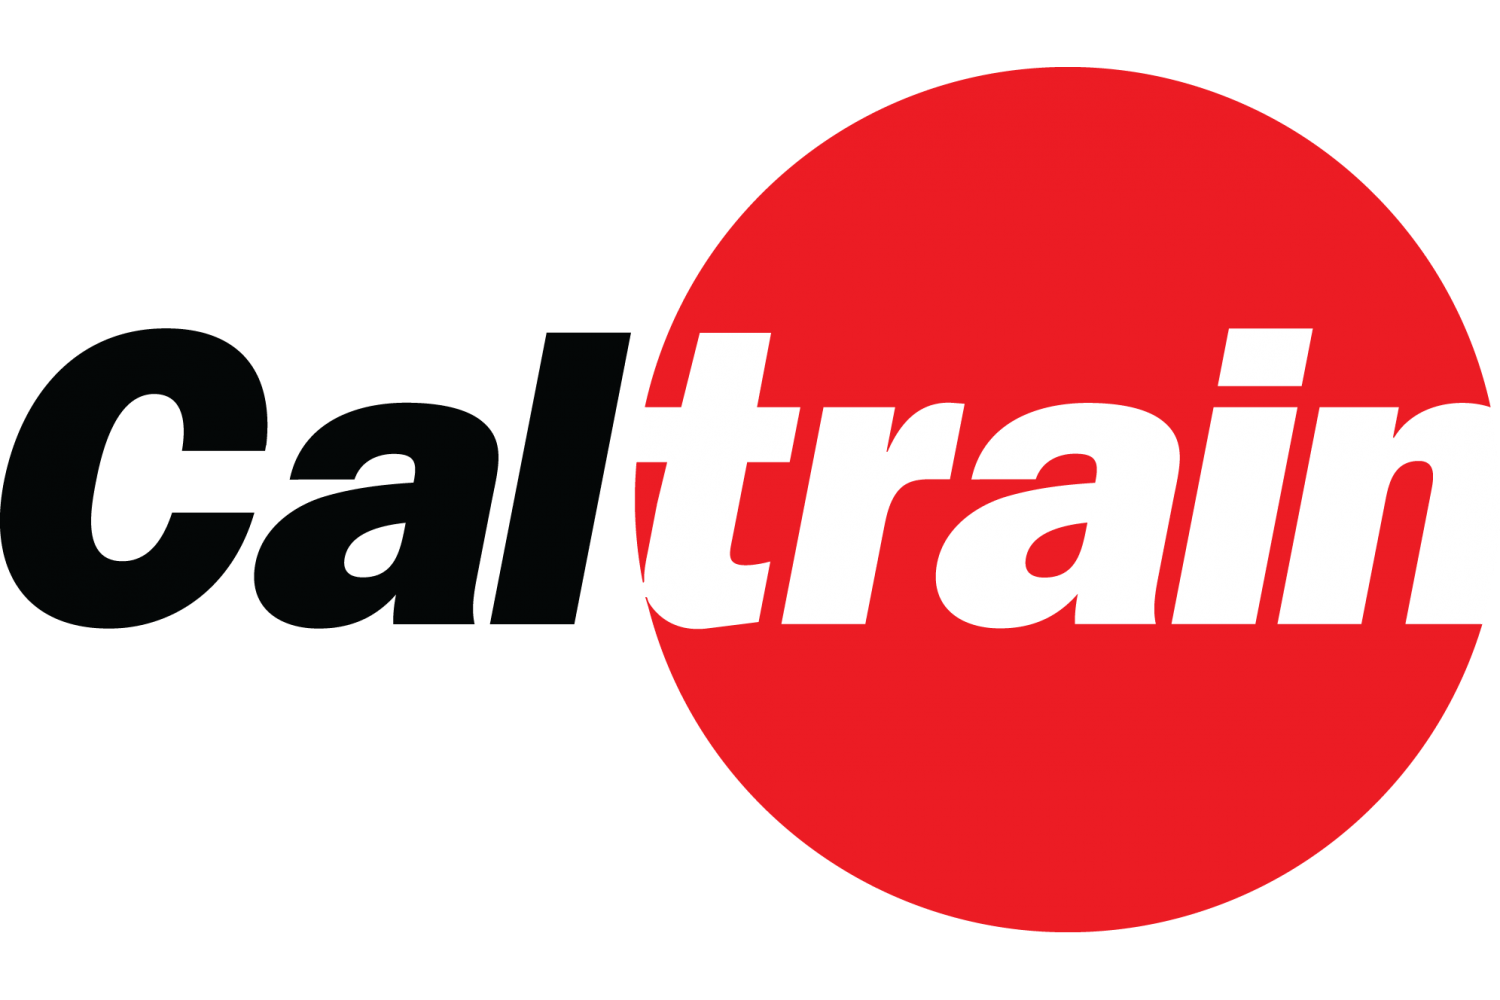 Caltrain logo